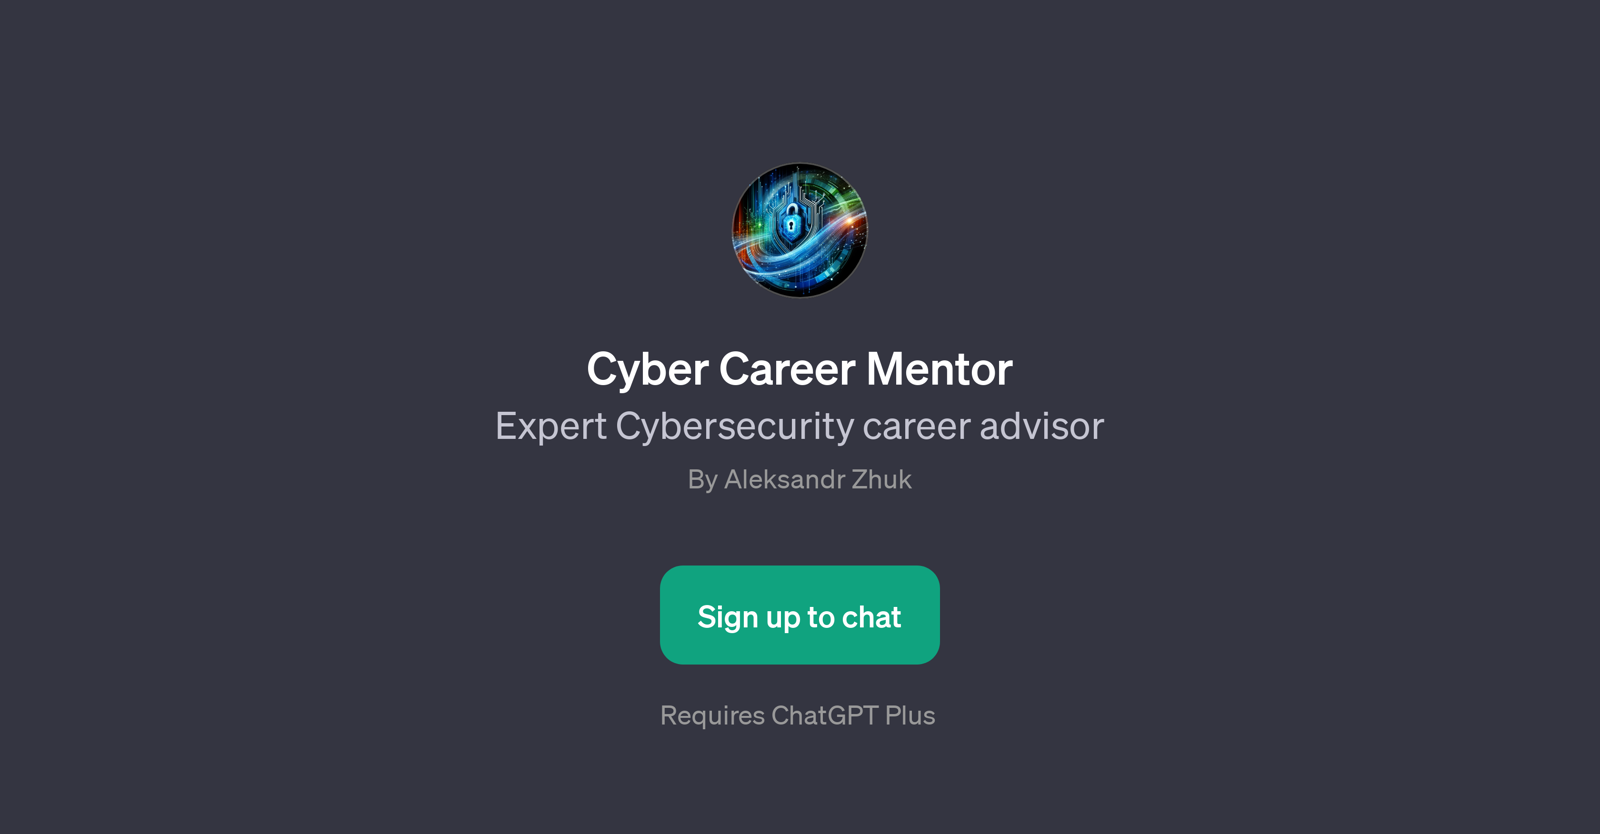 Cyber Career Mentor website